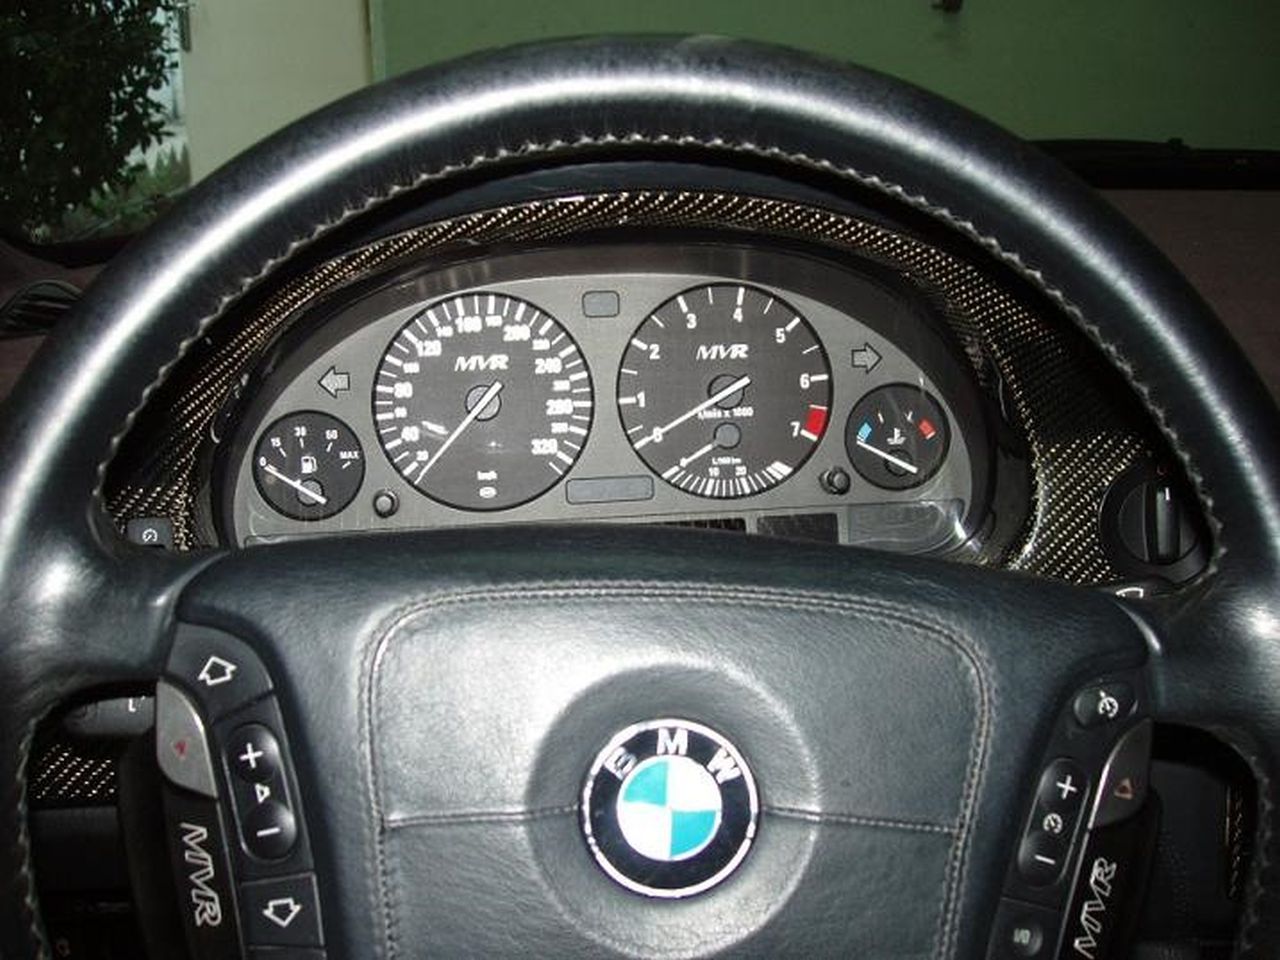 BMW MVR 560i E39 - M5 Super Saiyan ! 19